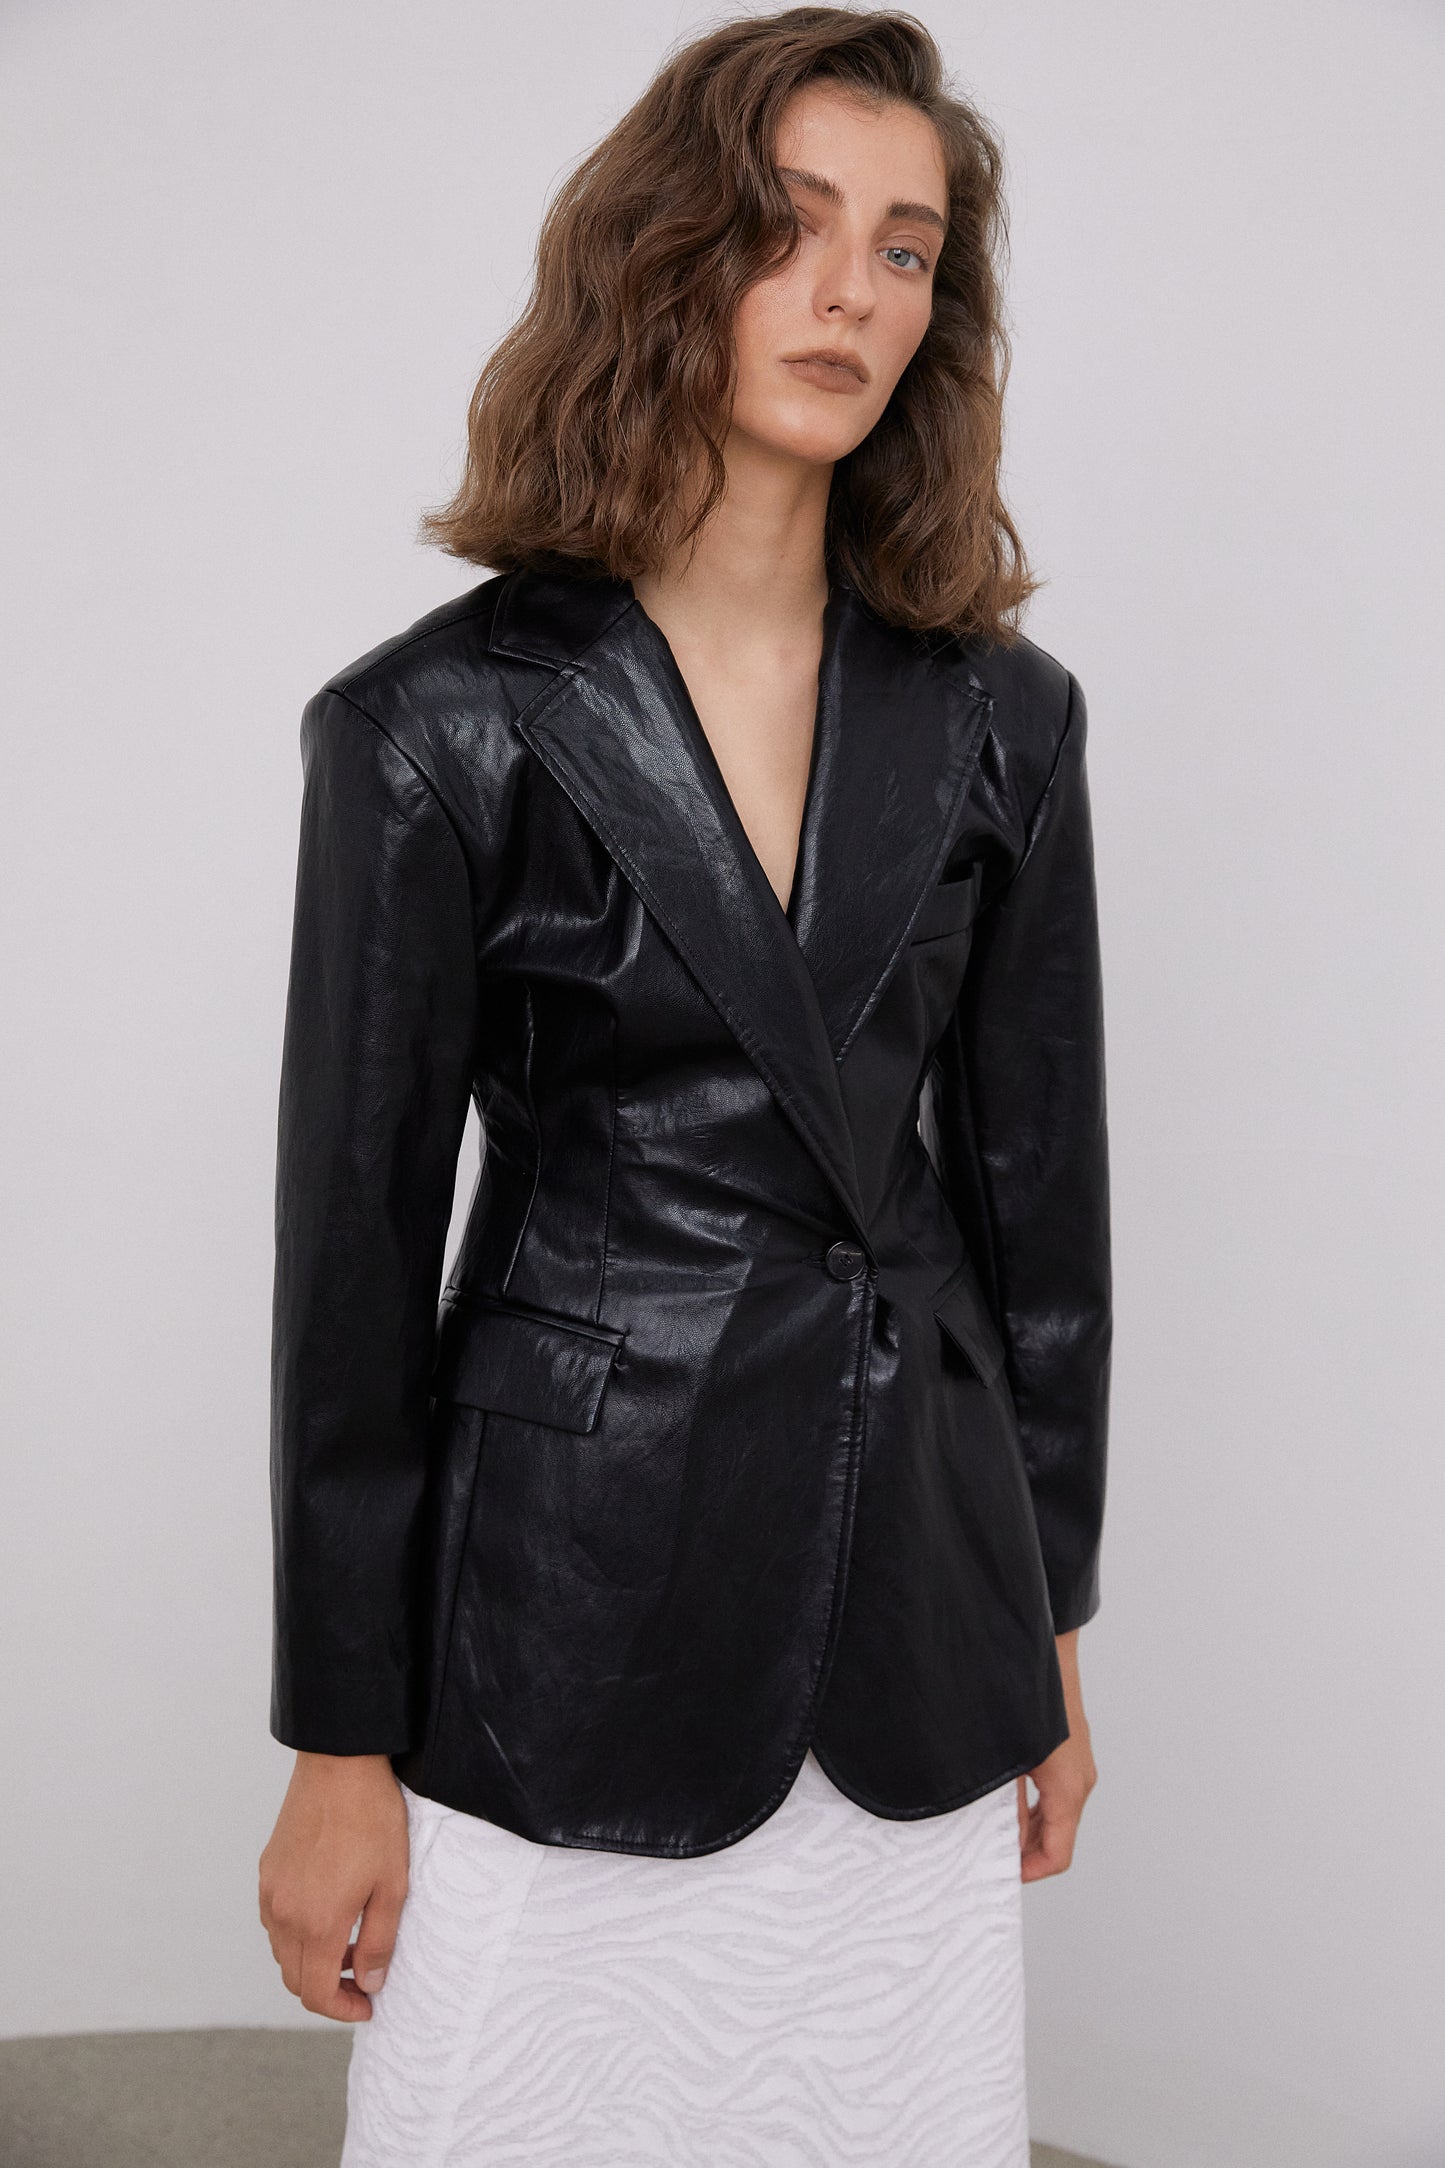 Cinched Waist Metallic Leather Jacket, Black